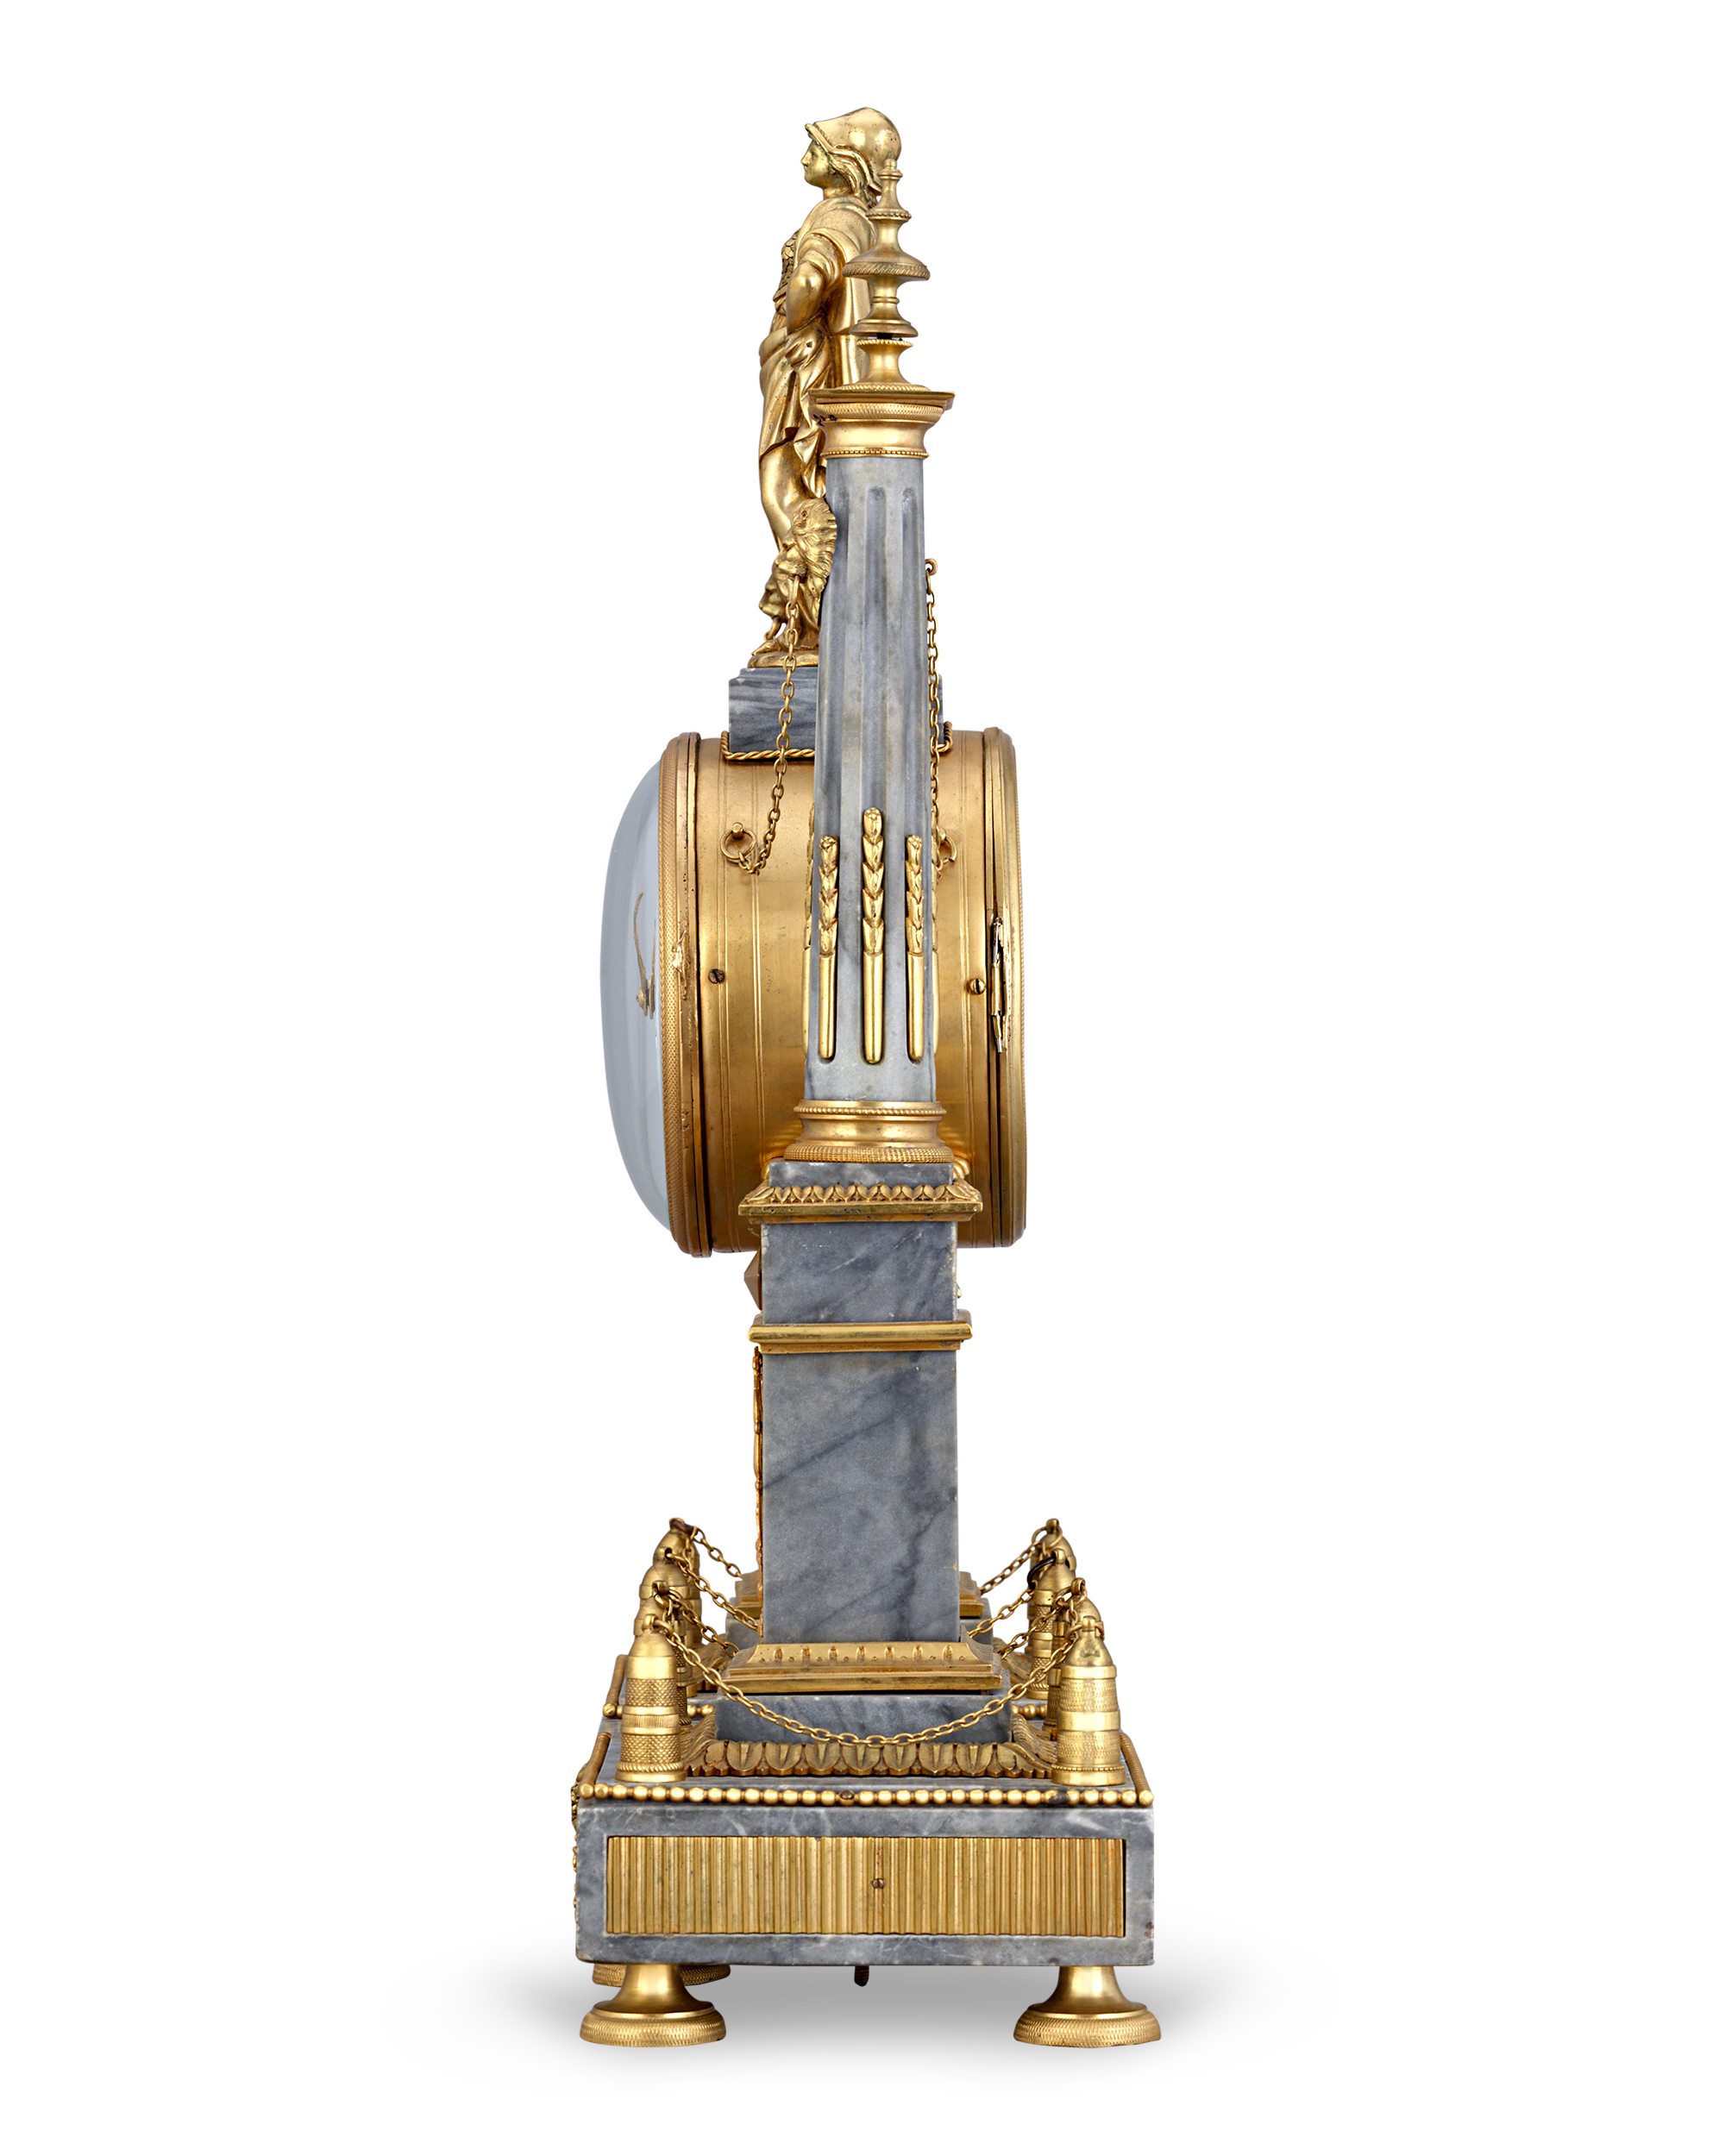 Louis XVI Marble Mantel Clock by Jean-Nicolas Schmit